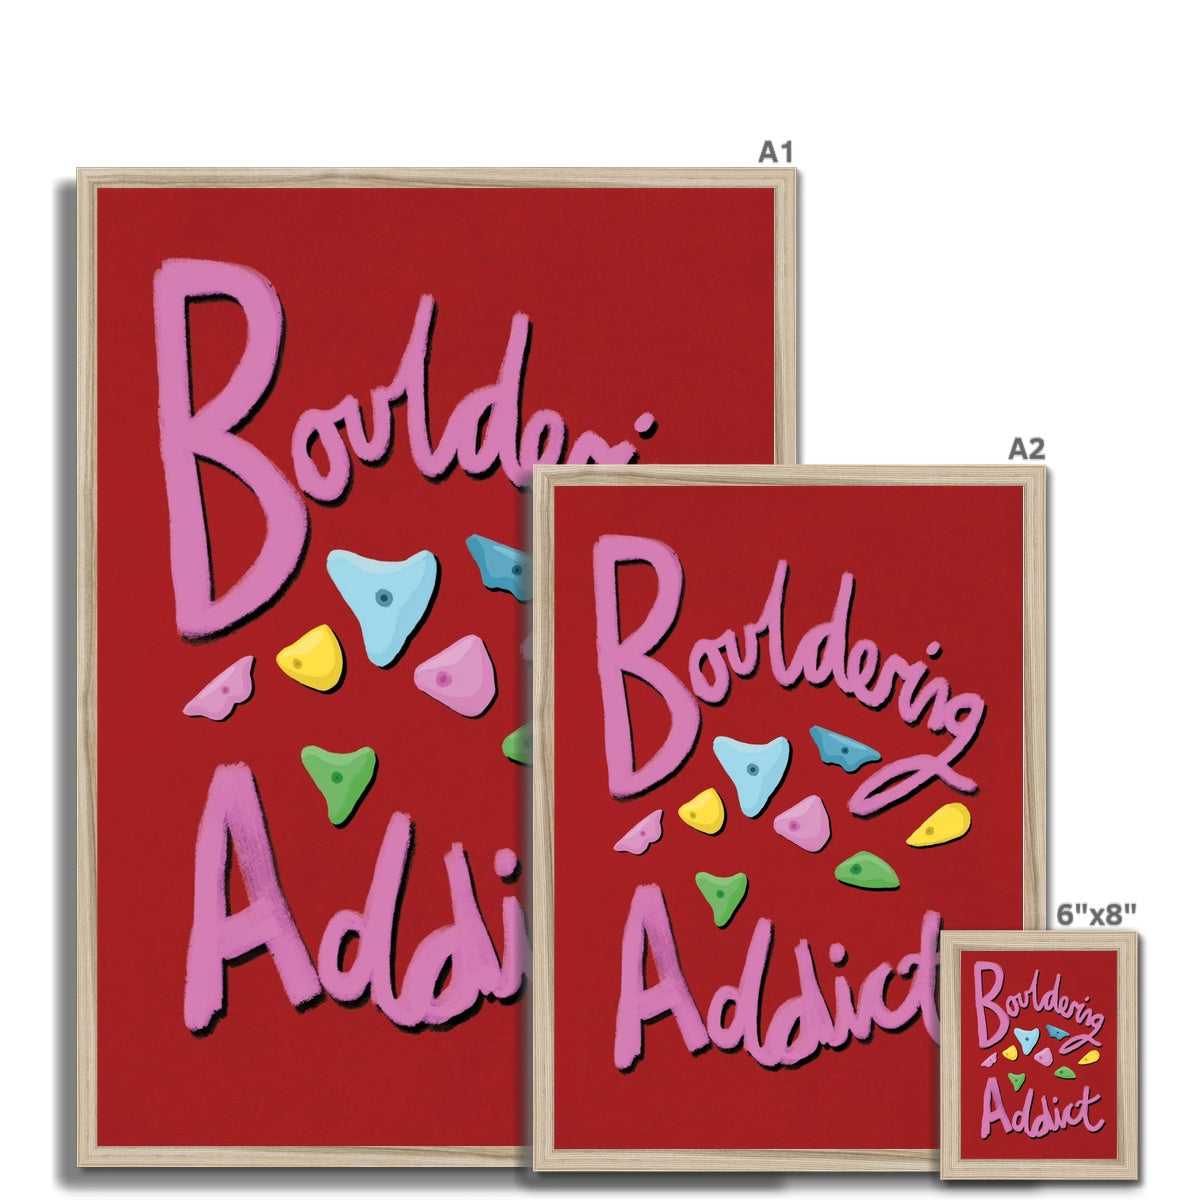 Bouldering Addict - Red and Pink Framed Print